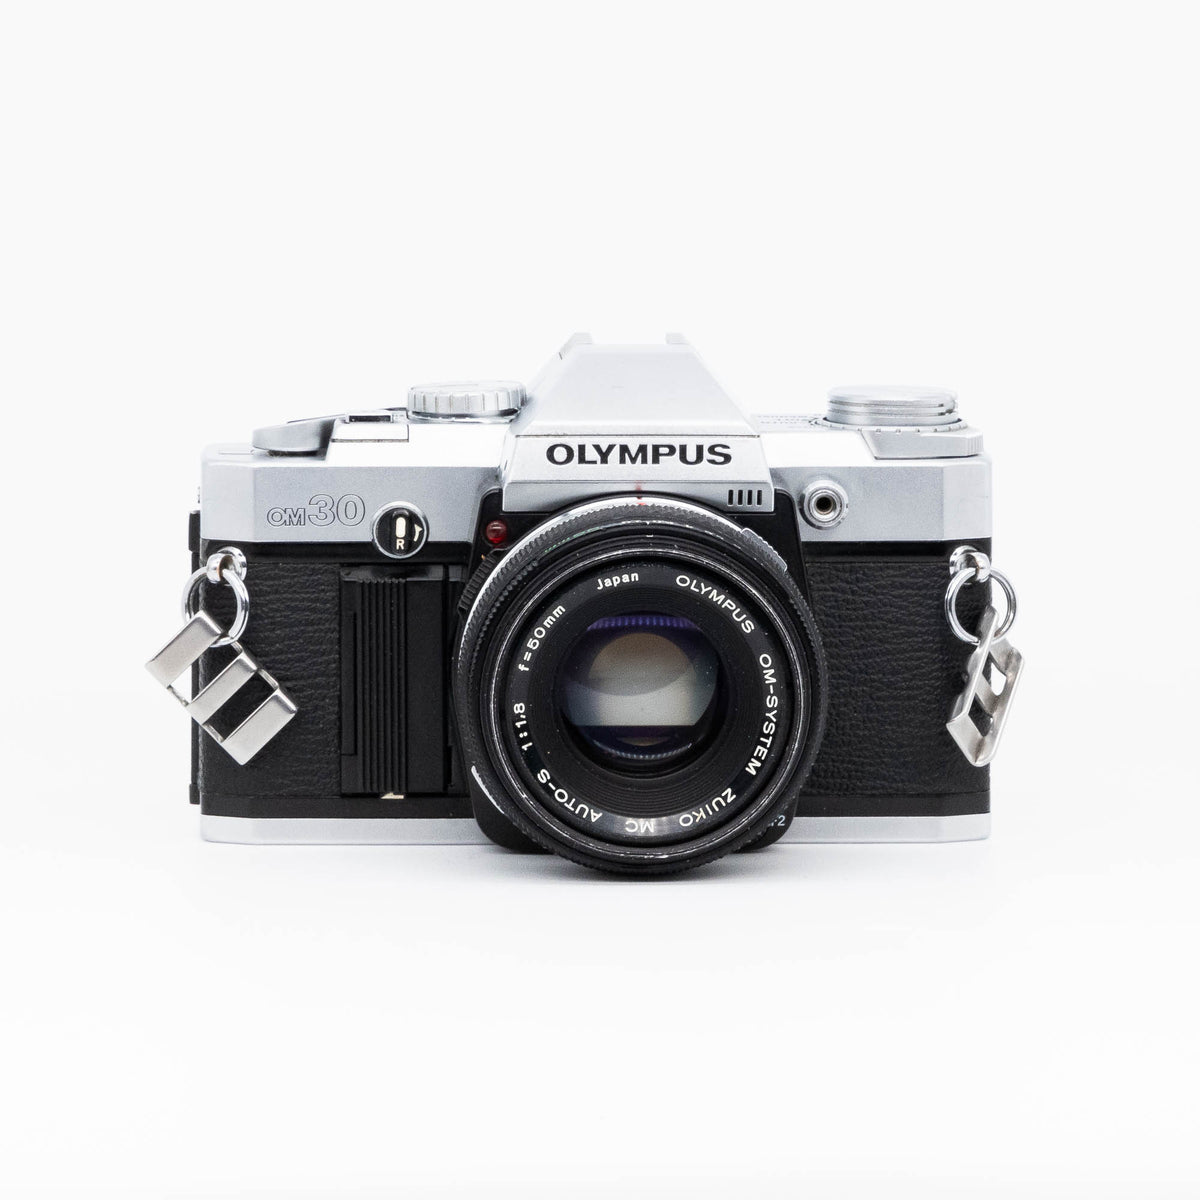 Olympus OM30 & Zuiko 50mm f/1.8